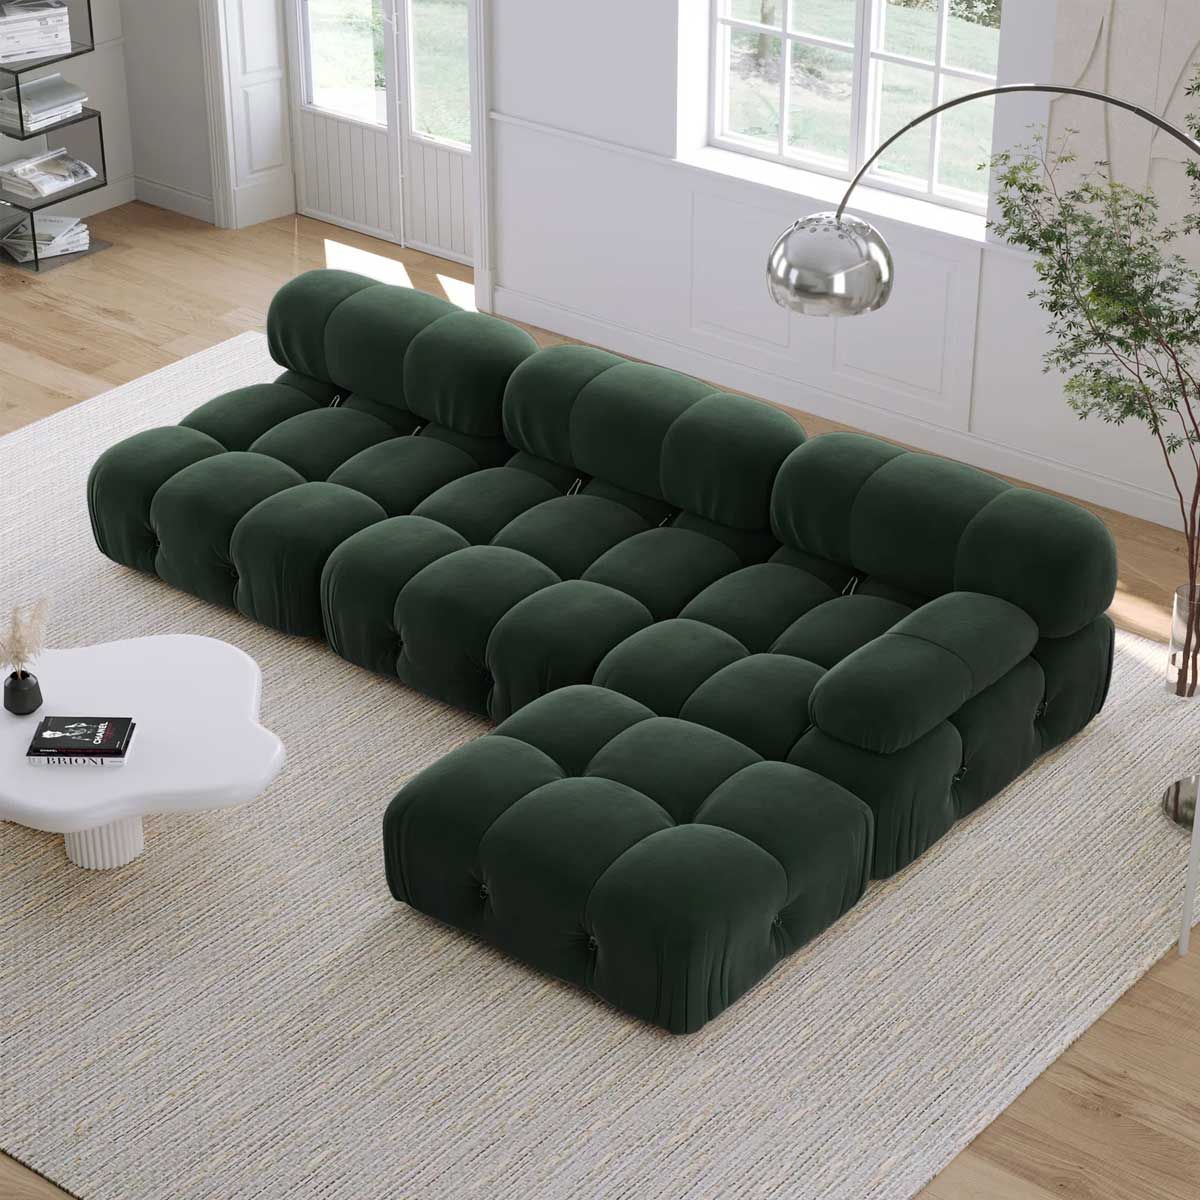 Delsea Modular Sectional Sofa In Green Velvet From Aed 4849 | Atoz Furniture Inside Green Velvet Modular Sectionals (View 11 of 15)